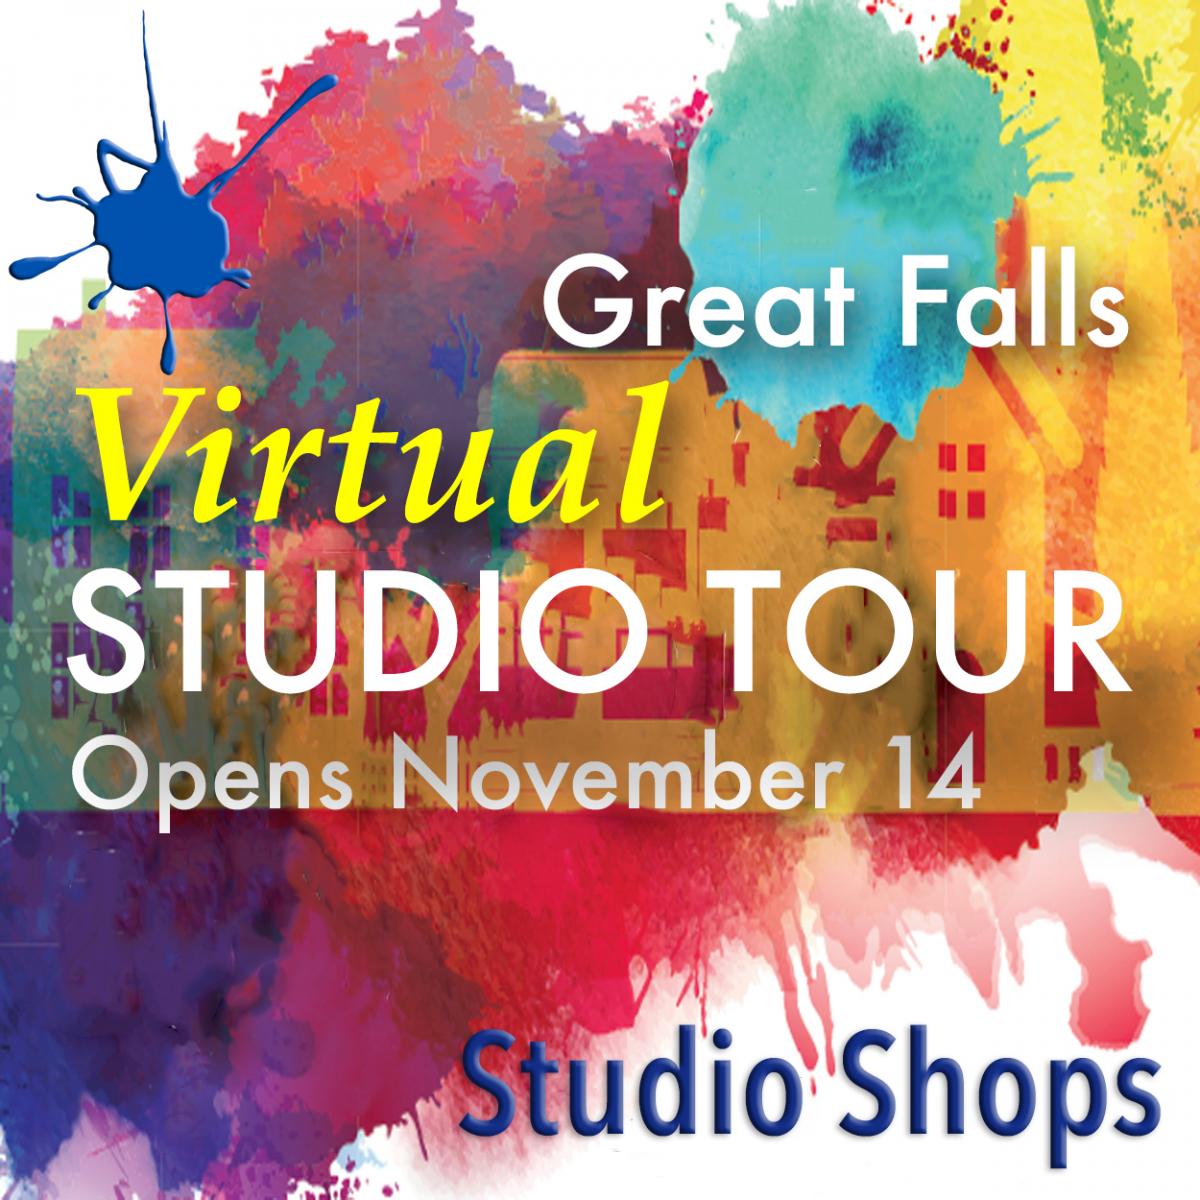 Great Falls Art Studio Tour